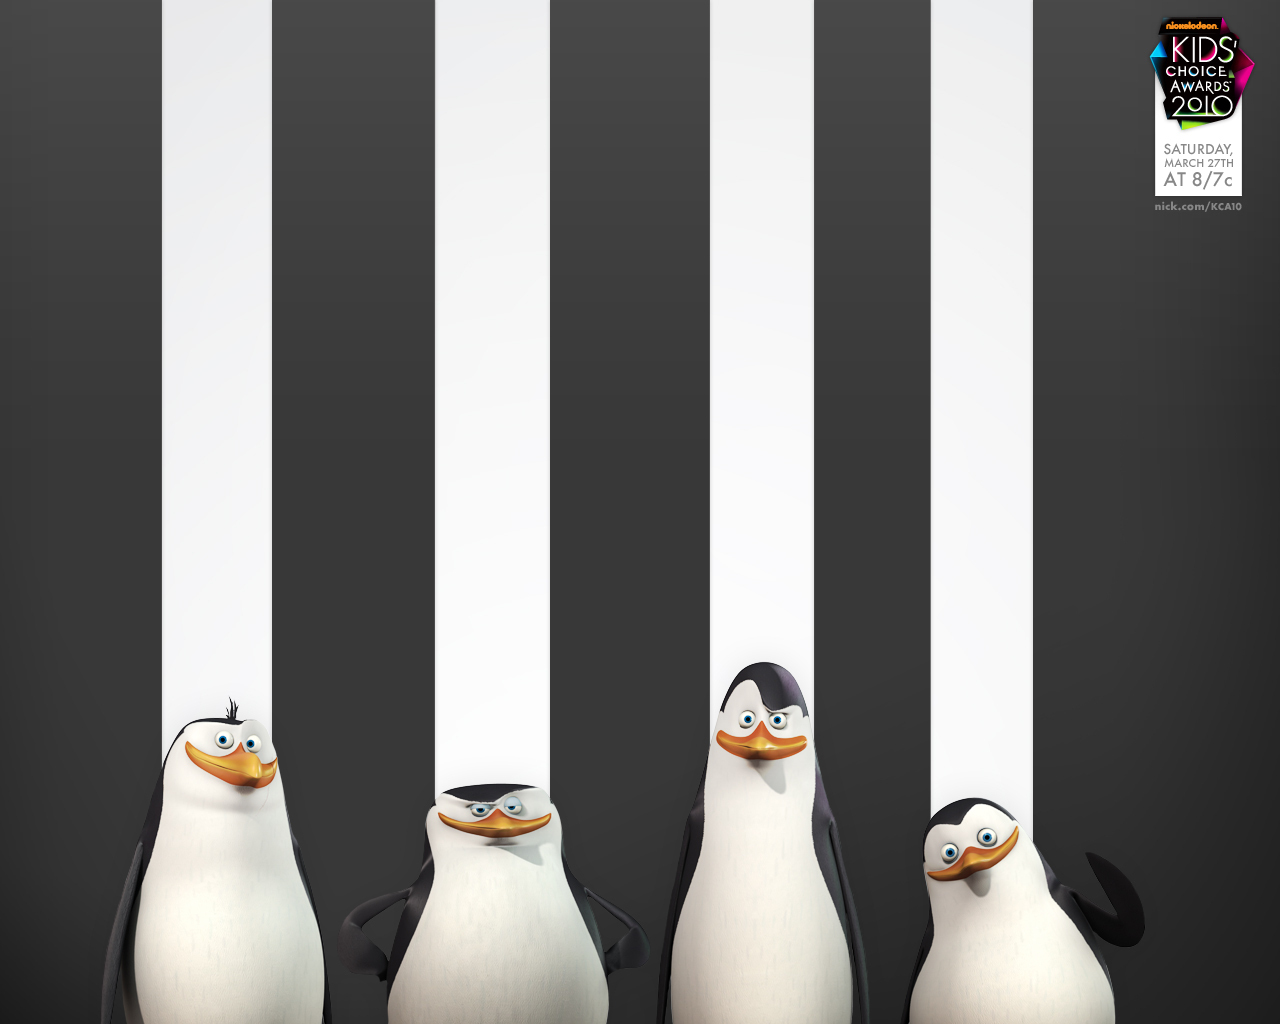 The penguins of madagascar - P, L and E Wallpaper 11869221 - Fanpop